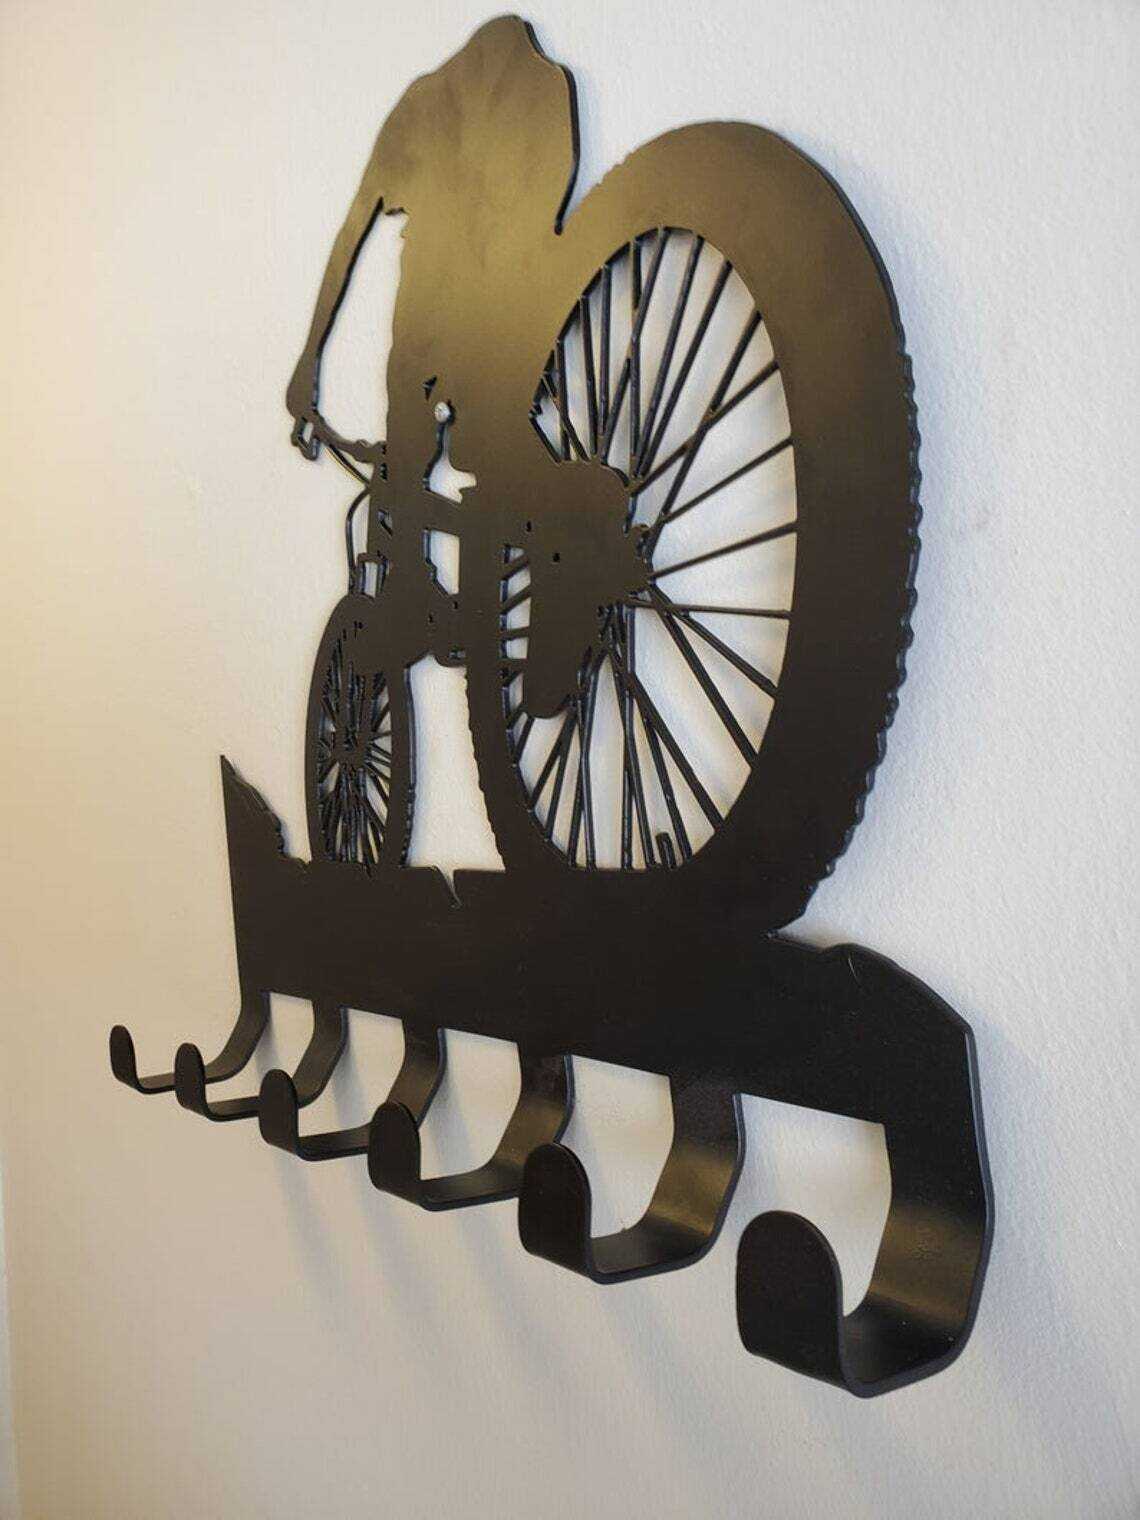 Mountain bike gear rack / metal wall decor